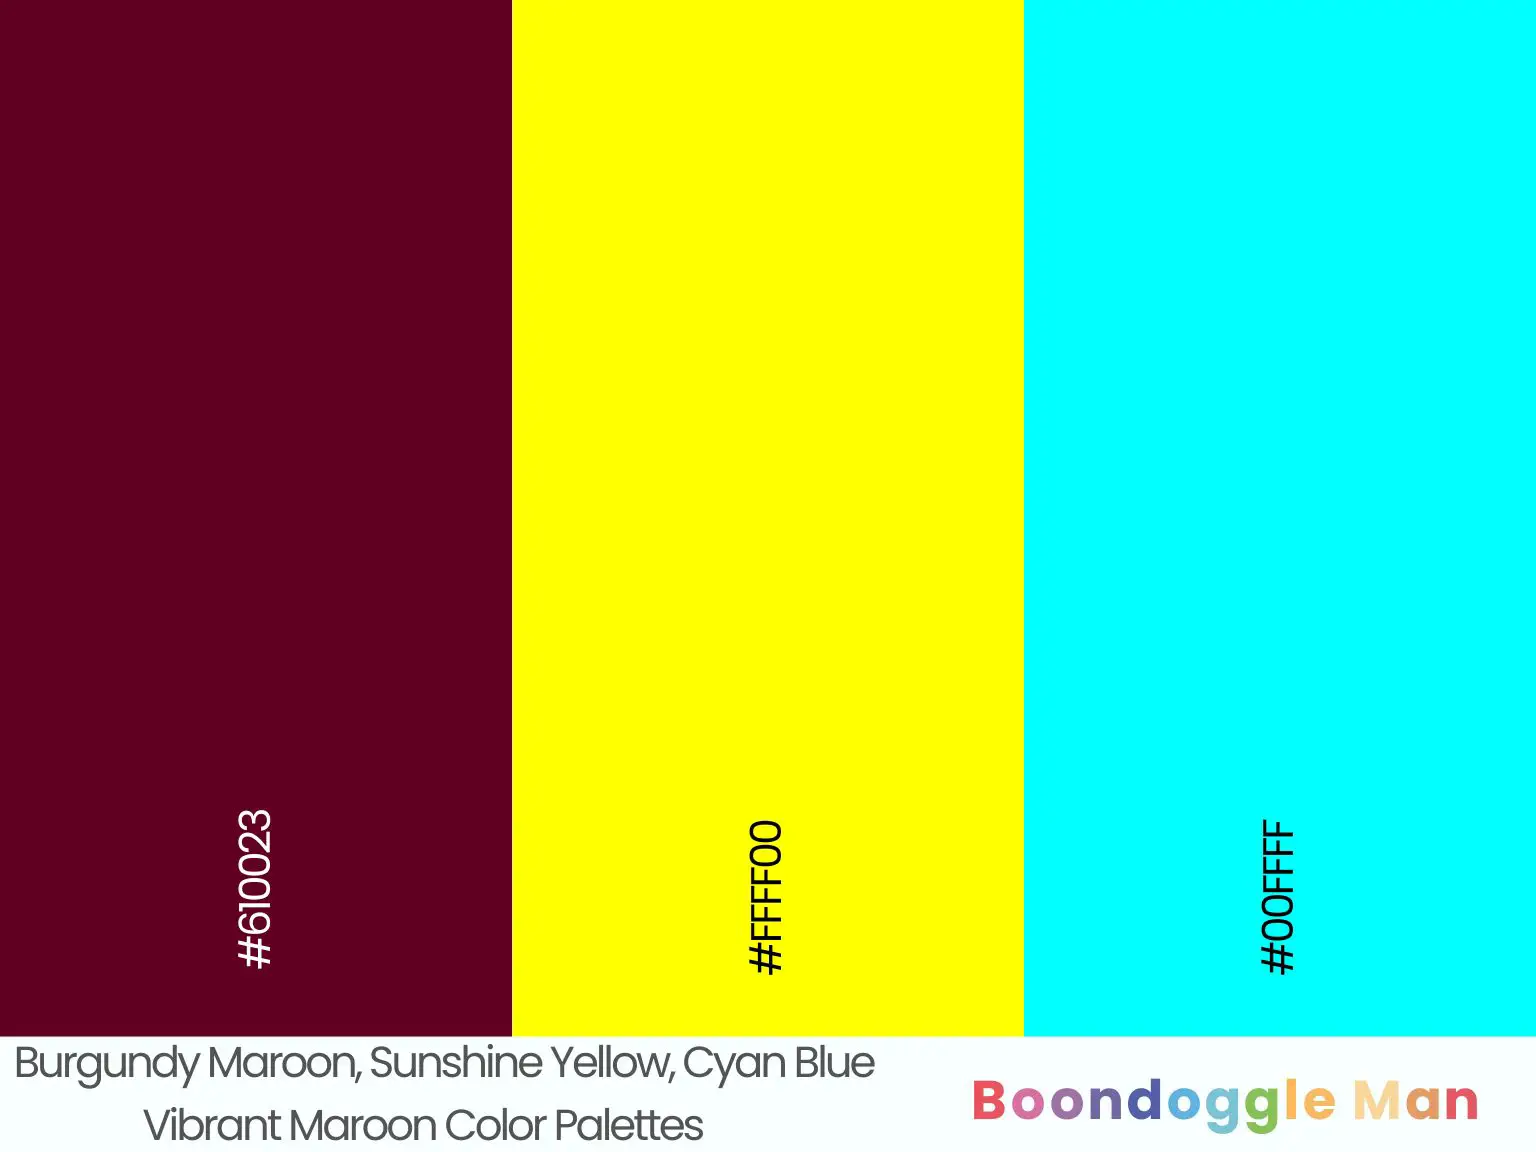 Burgundy Maroon, Sunshine Yellow, Cyan Blue